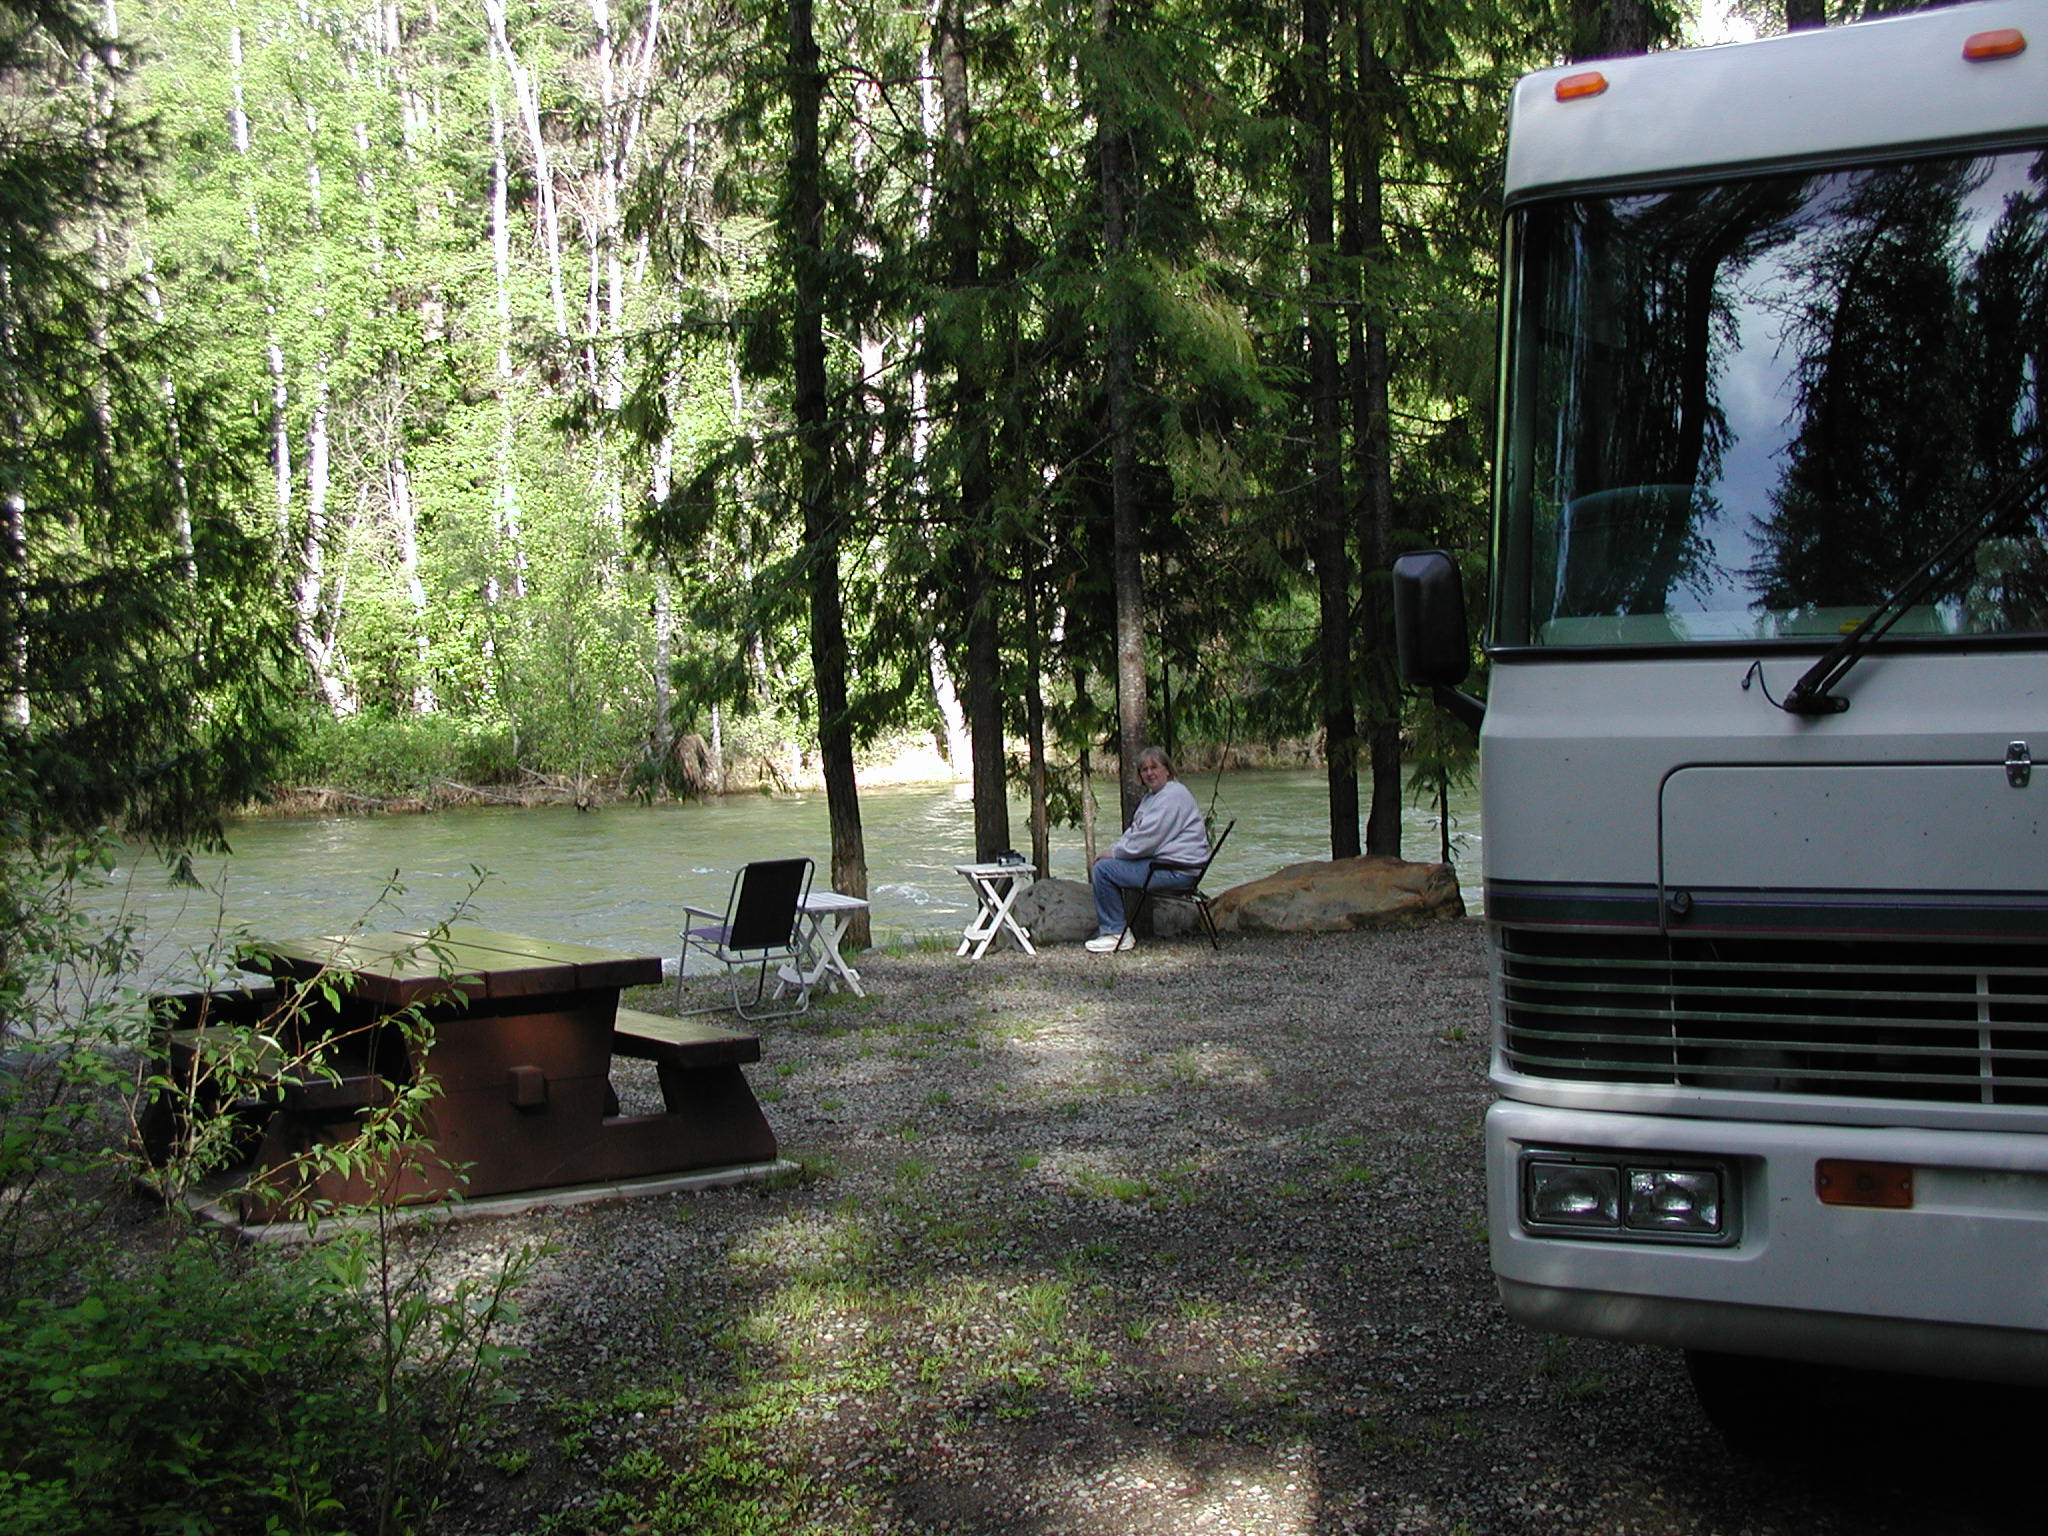 Campsite at Yahk Prov. Park, BC